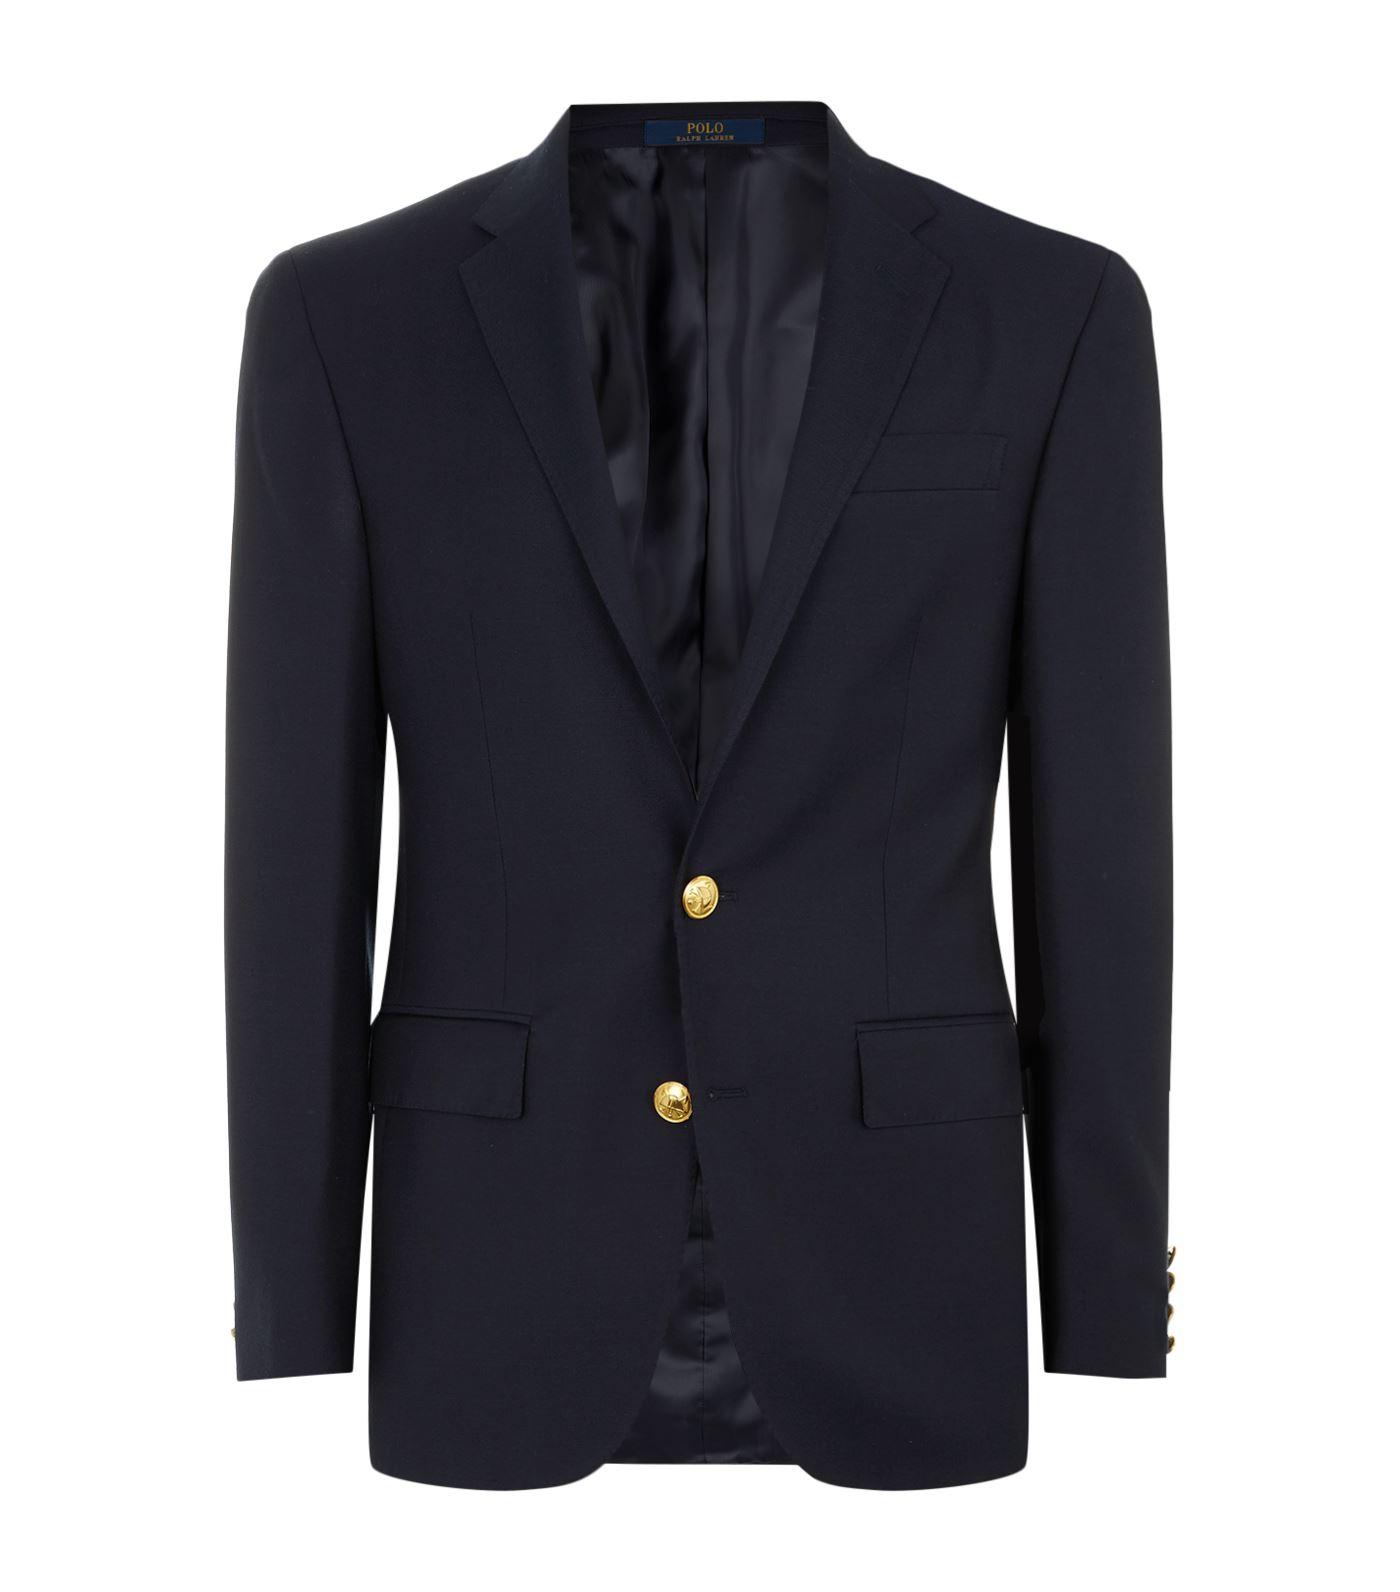 Polo Ralph Lauren Gold Button Wool Blazer in Navy (Blue) for Men - Lyst